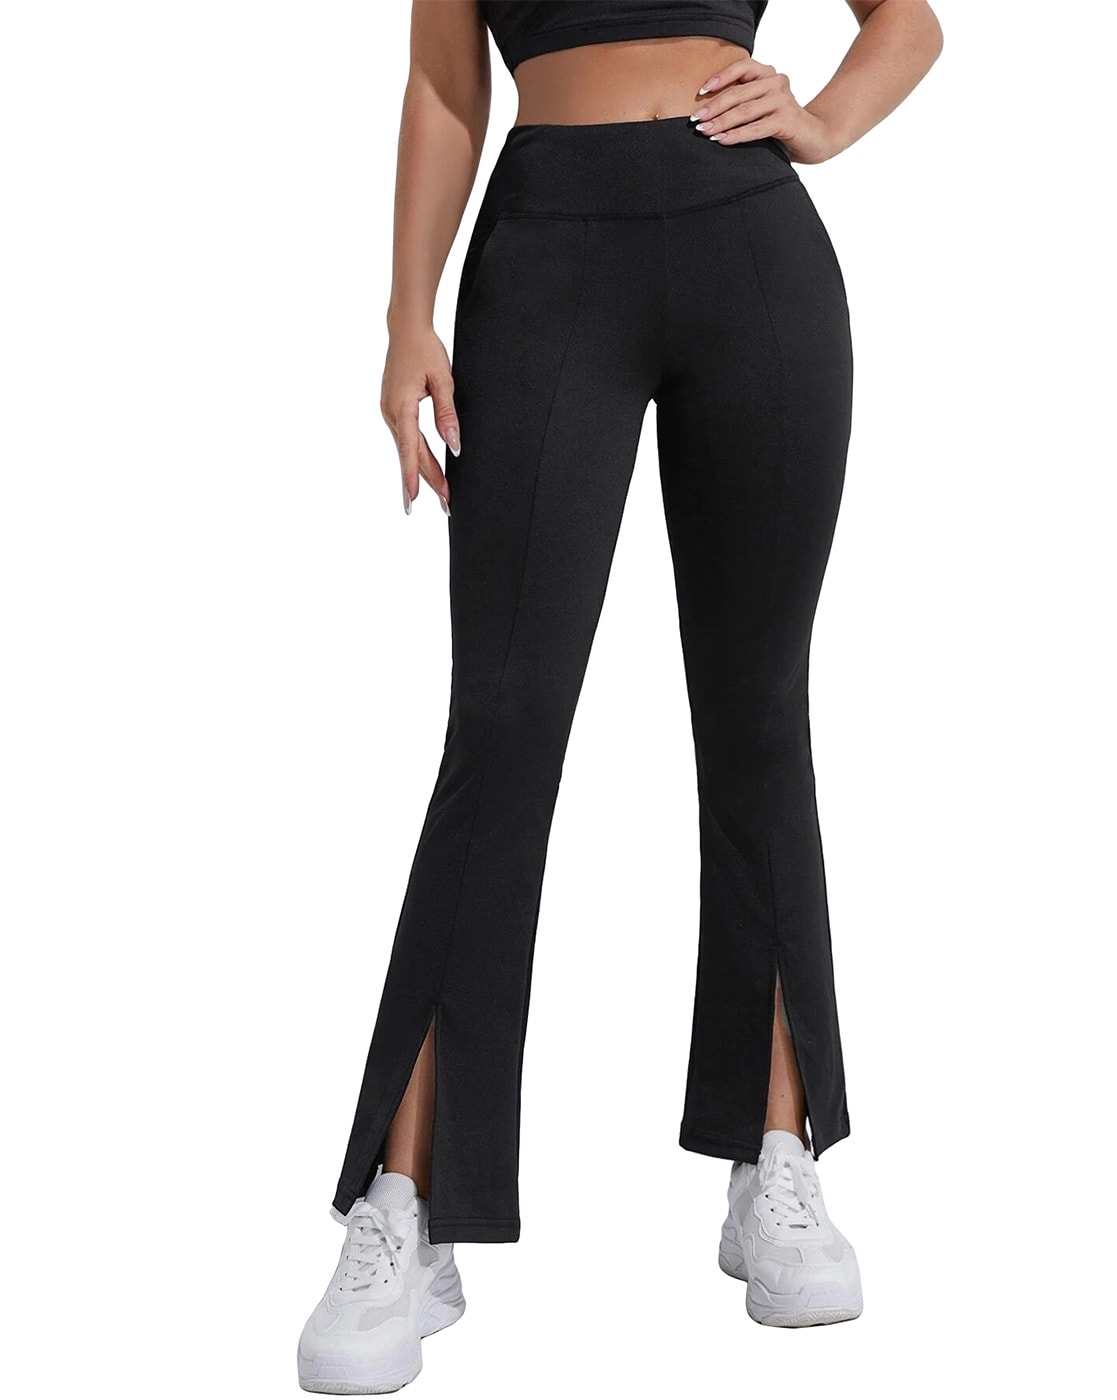 HDE Yoga Pants with Pockets for Women High Waisted Tummy Control Leggings ( Black, L) - Walmart.com